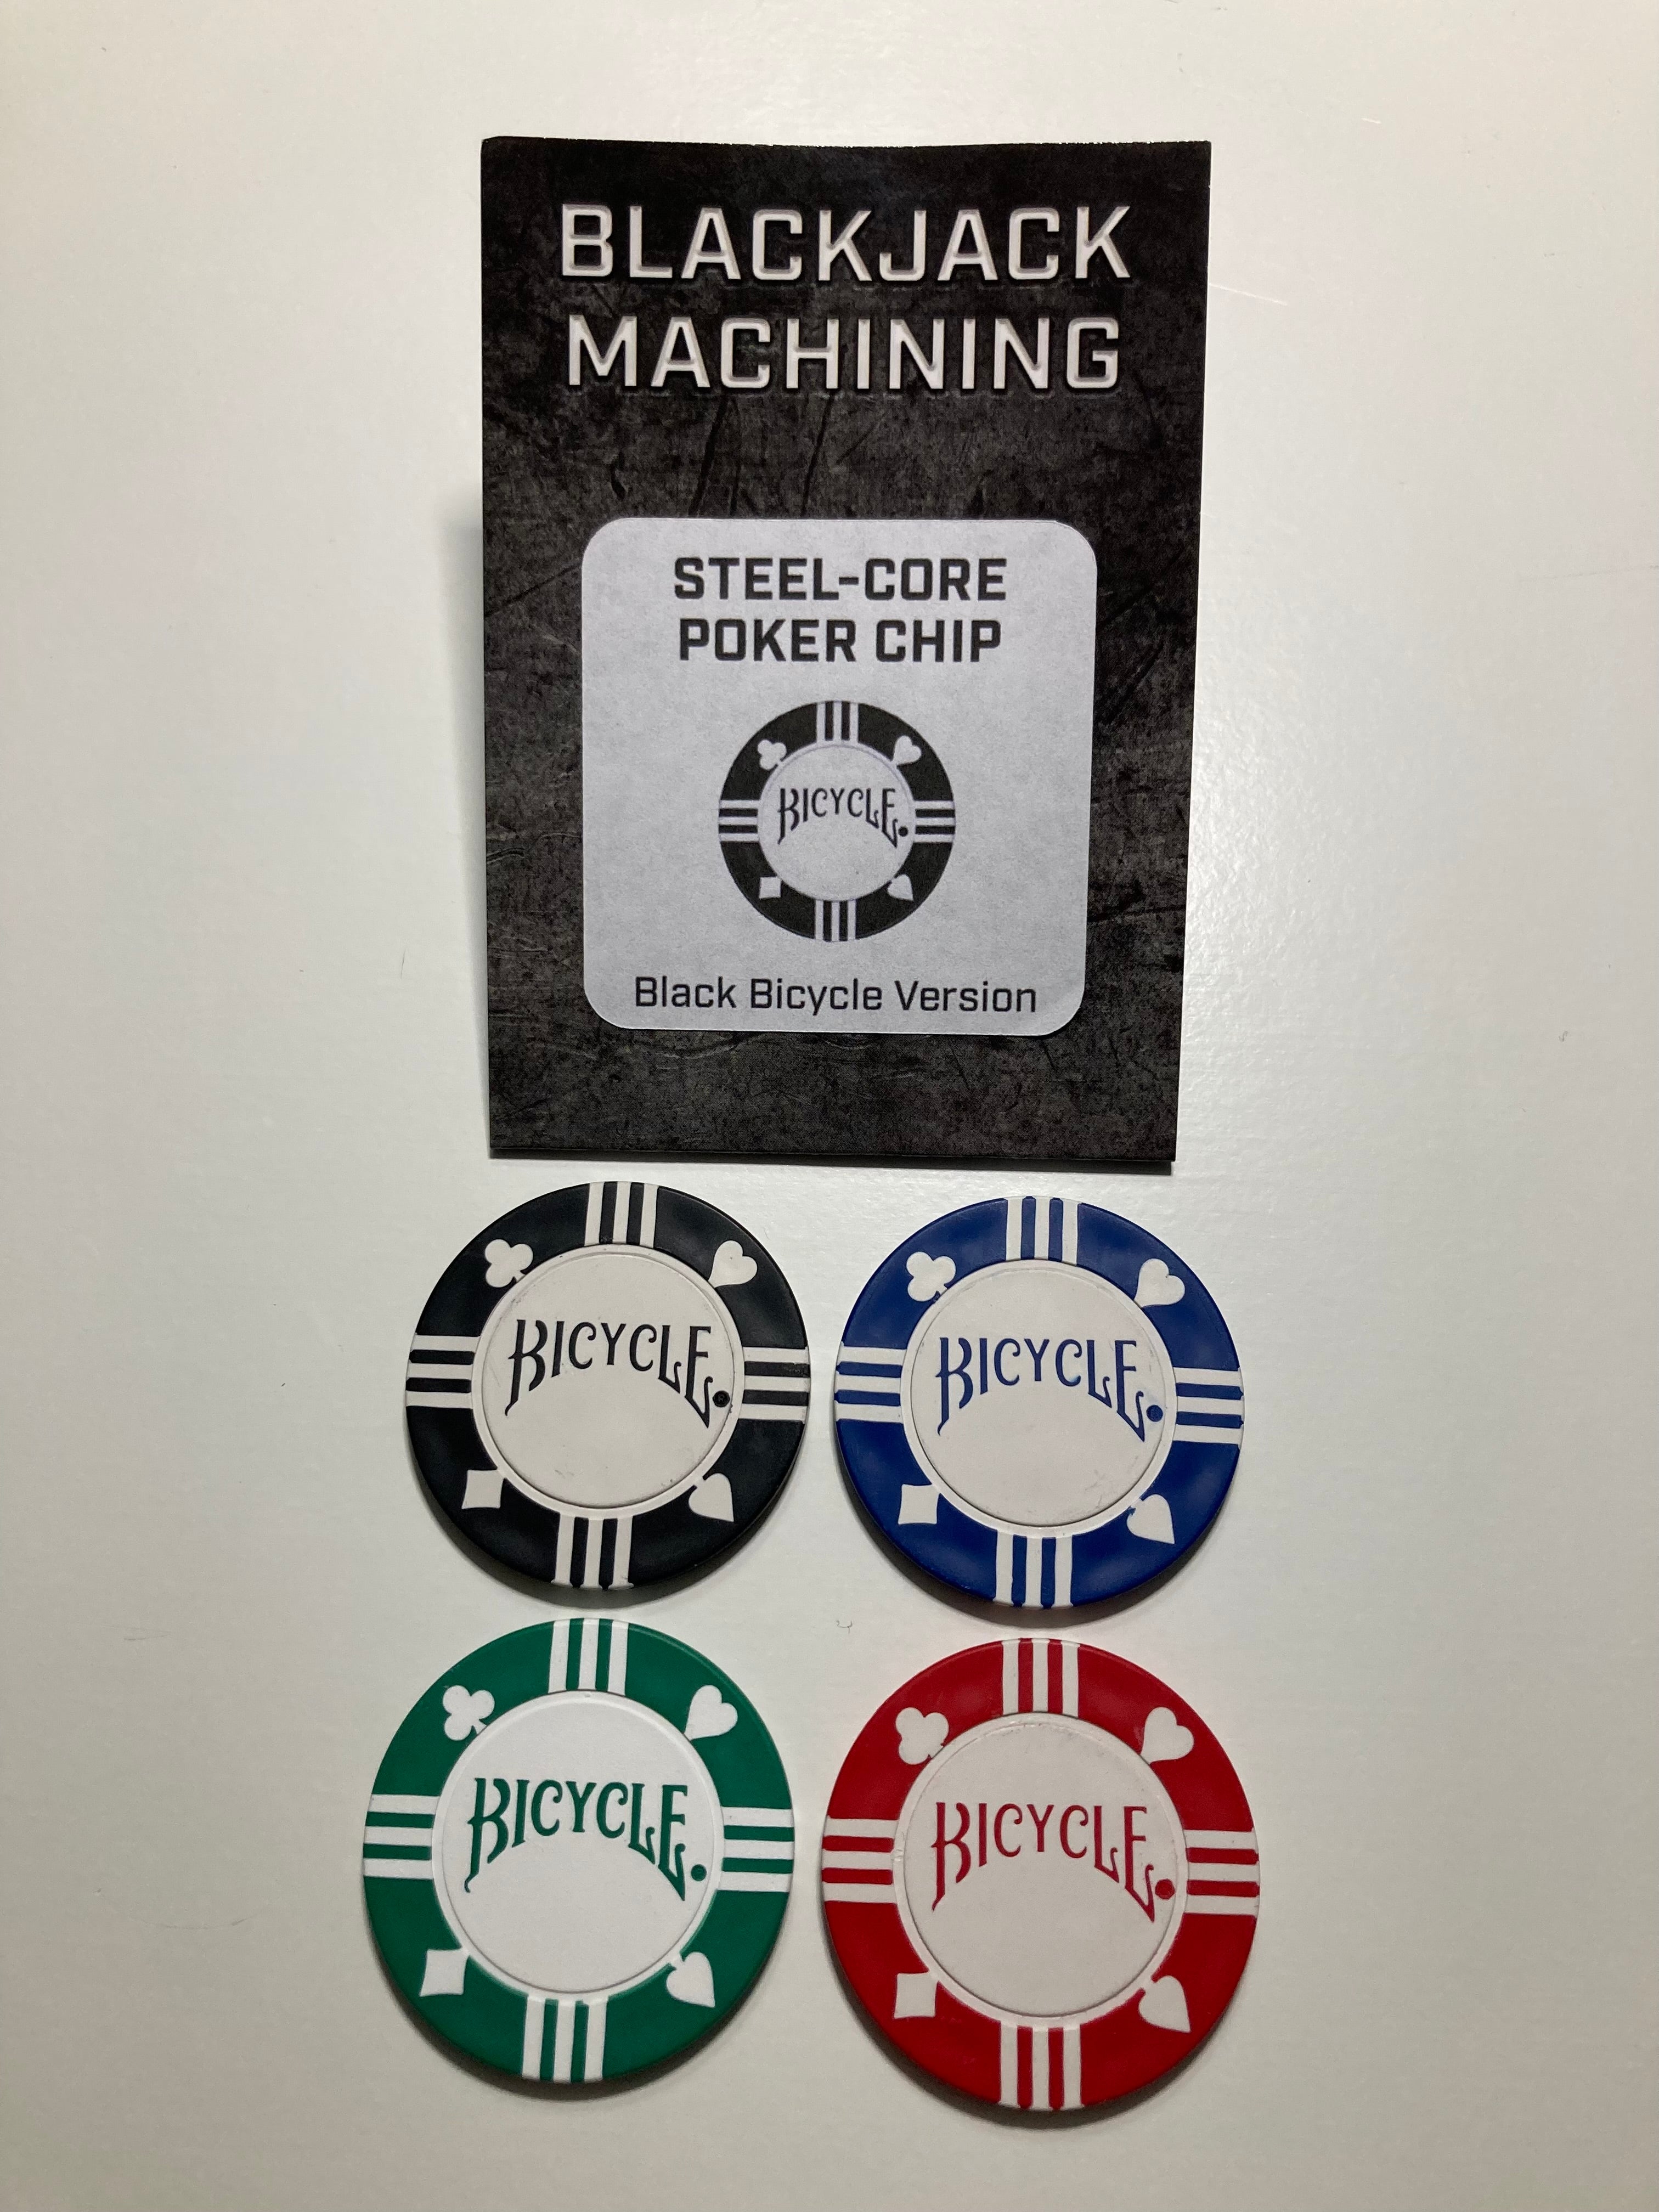 Steel-core Poker Chip Bicycle by Blackjack Machining